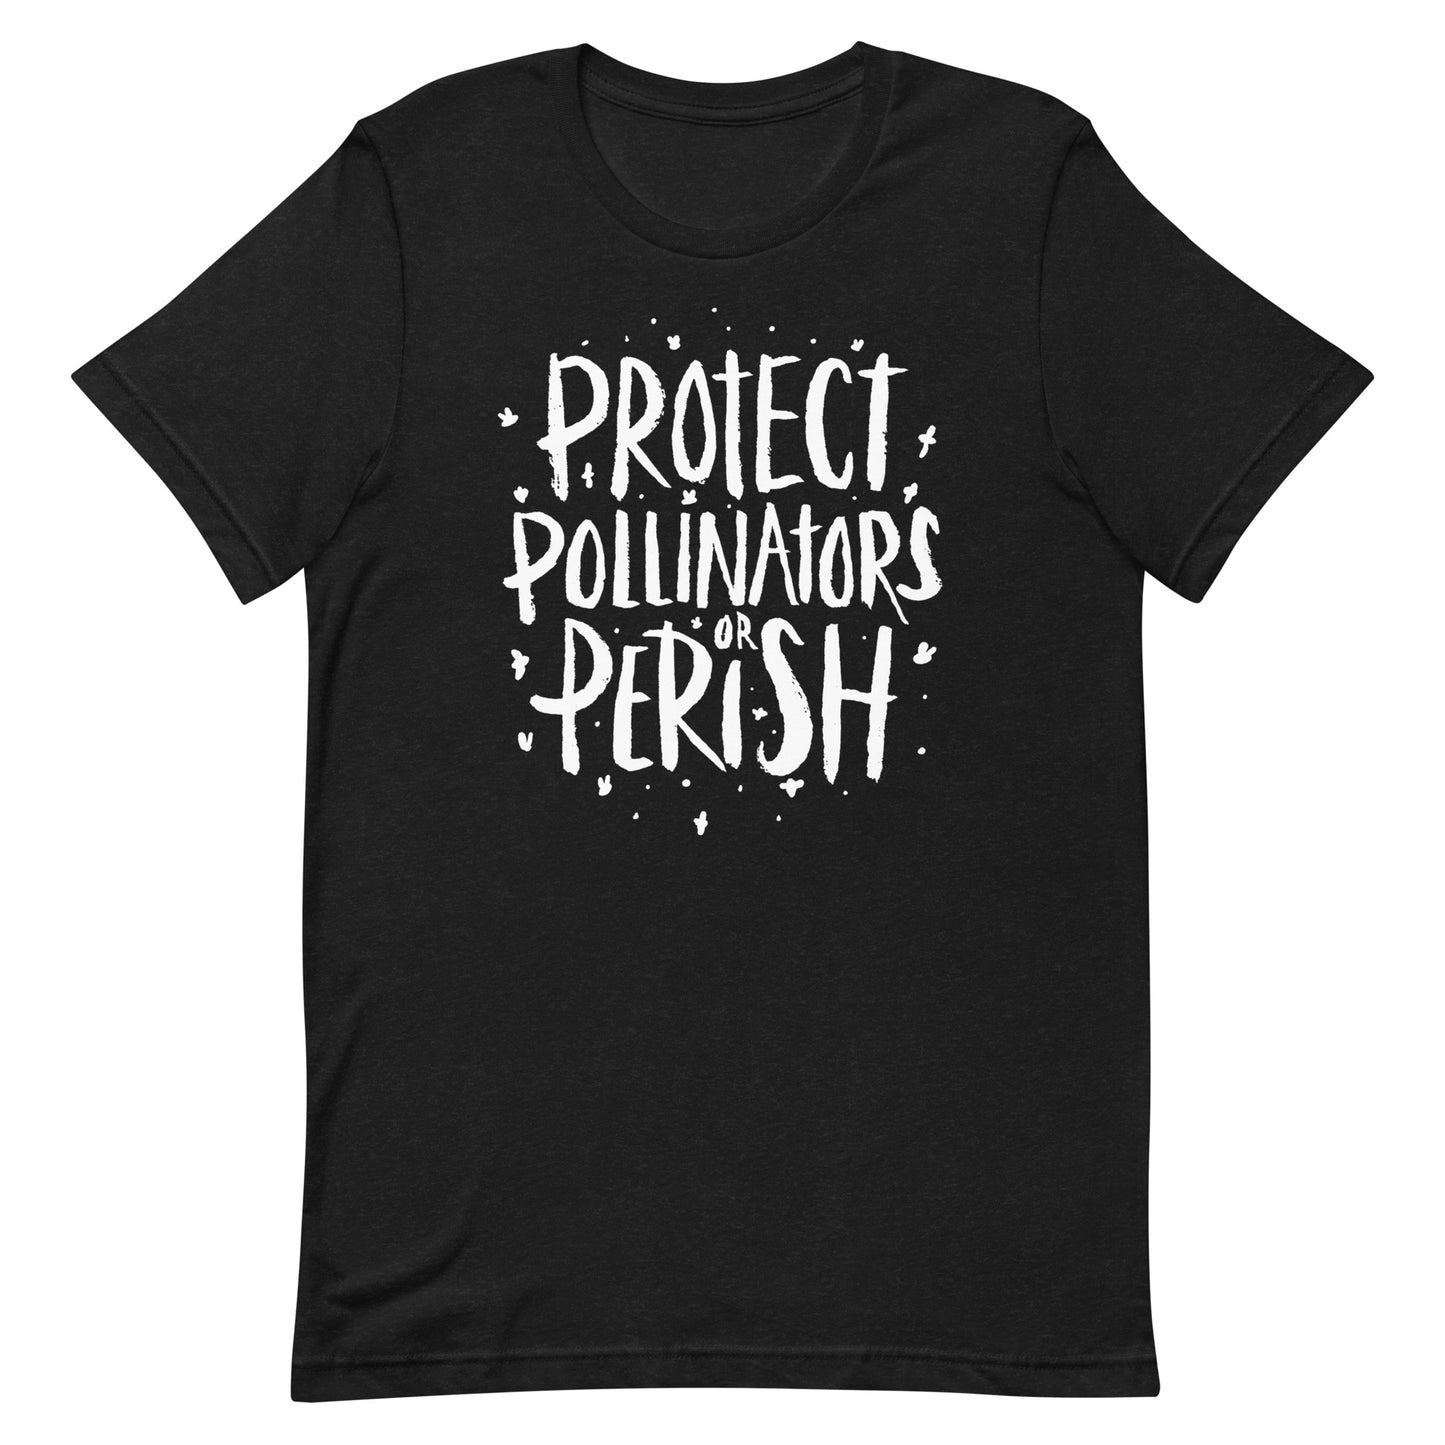 Protect Pollinators or Perish (Dark Color Shirt)